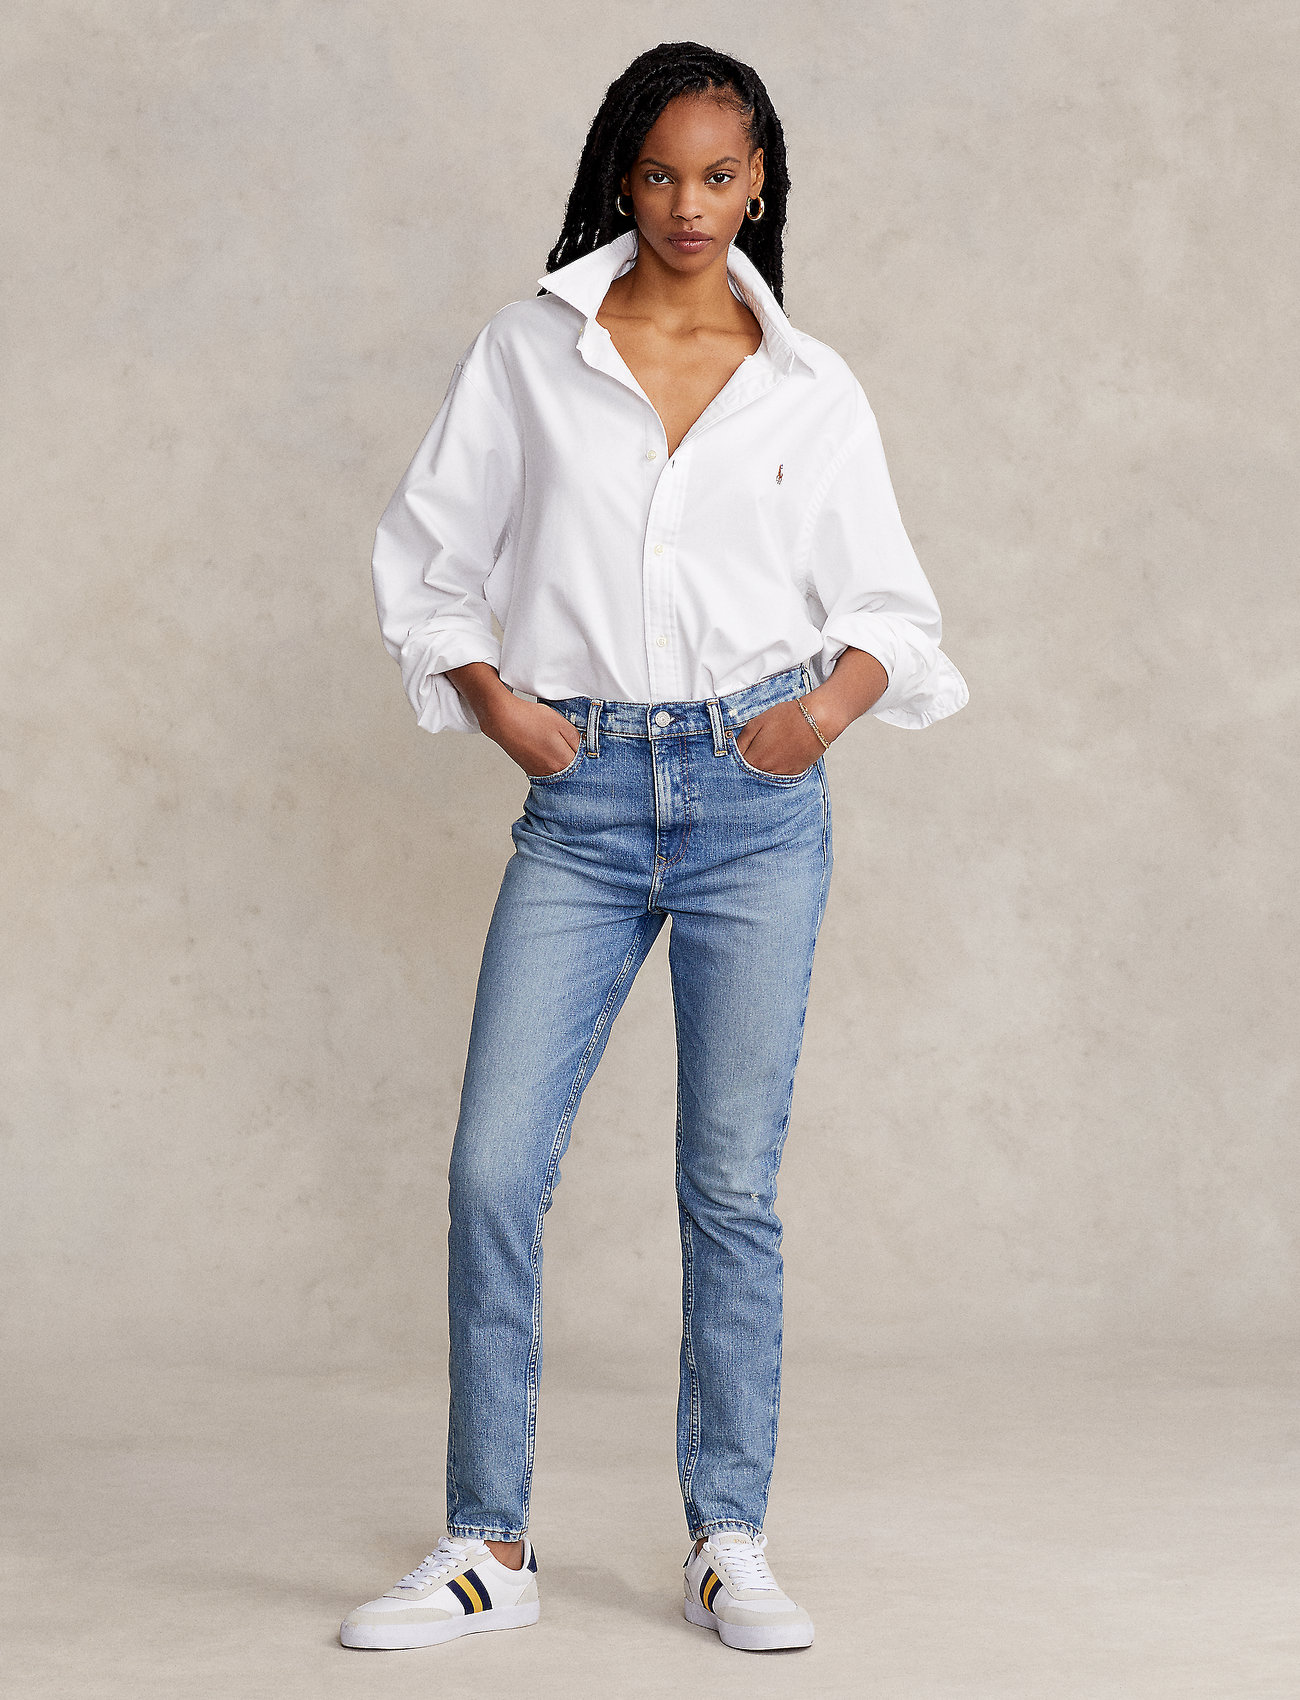 Stevig Vleien overzien Polo Ralph Lauren Tompkins High-rise Skinny Jean - Slim jeans - Boozt.com